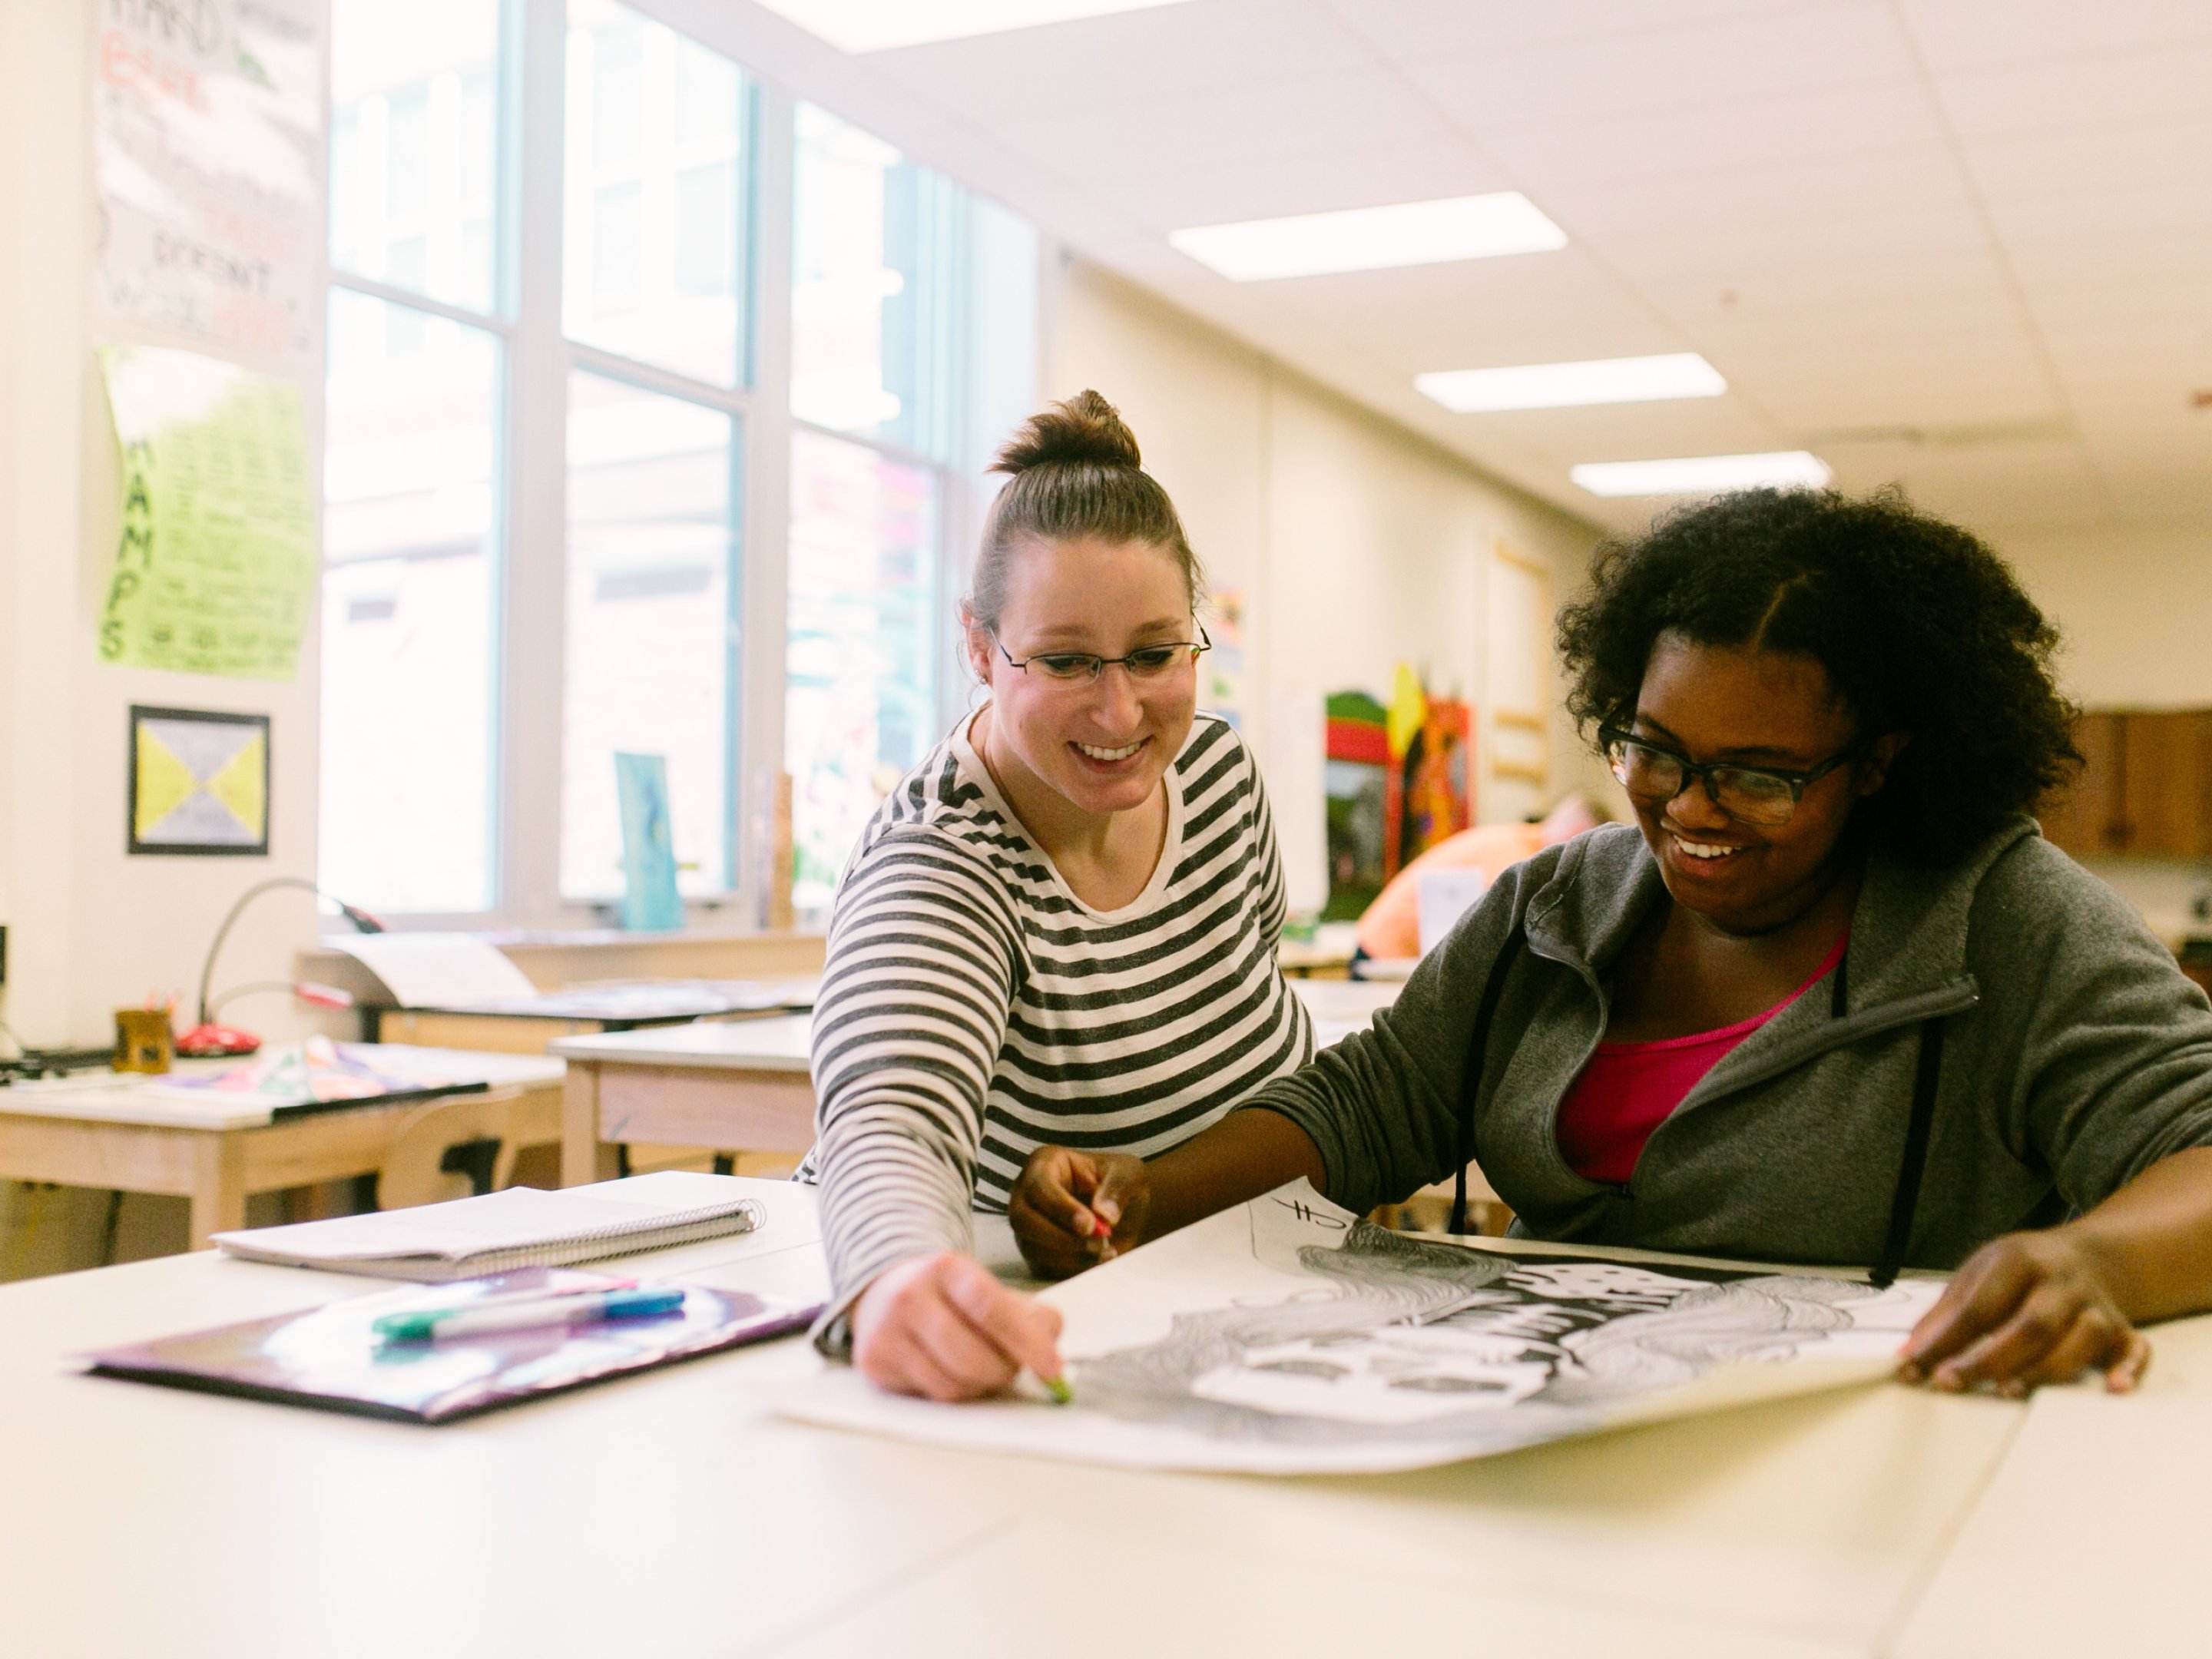 An art teacher helps a student with their drawing in art class